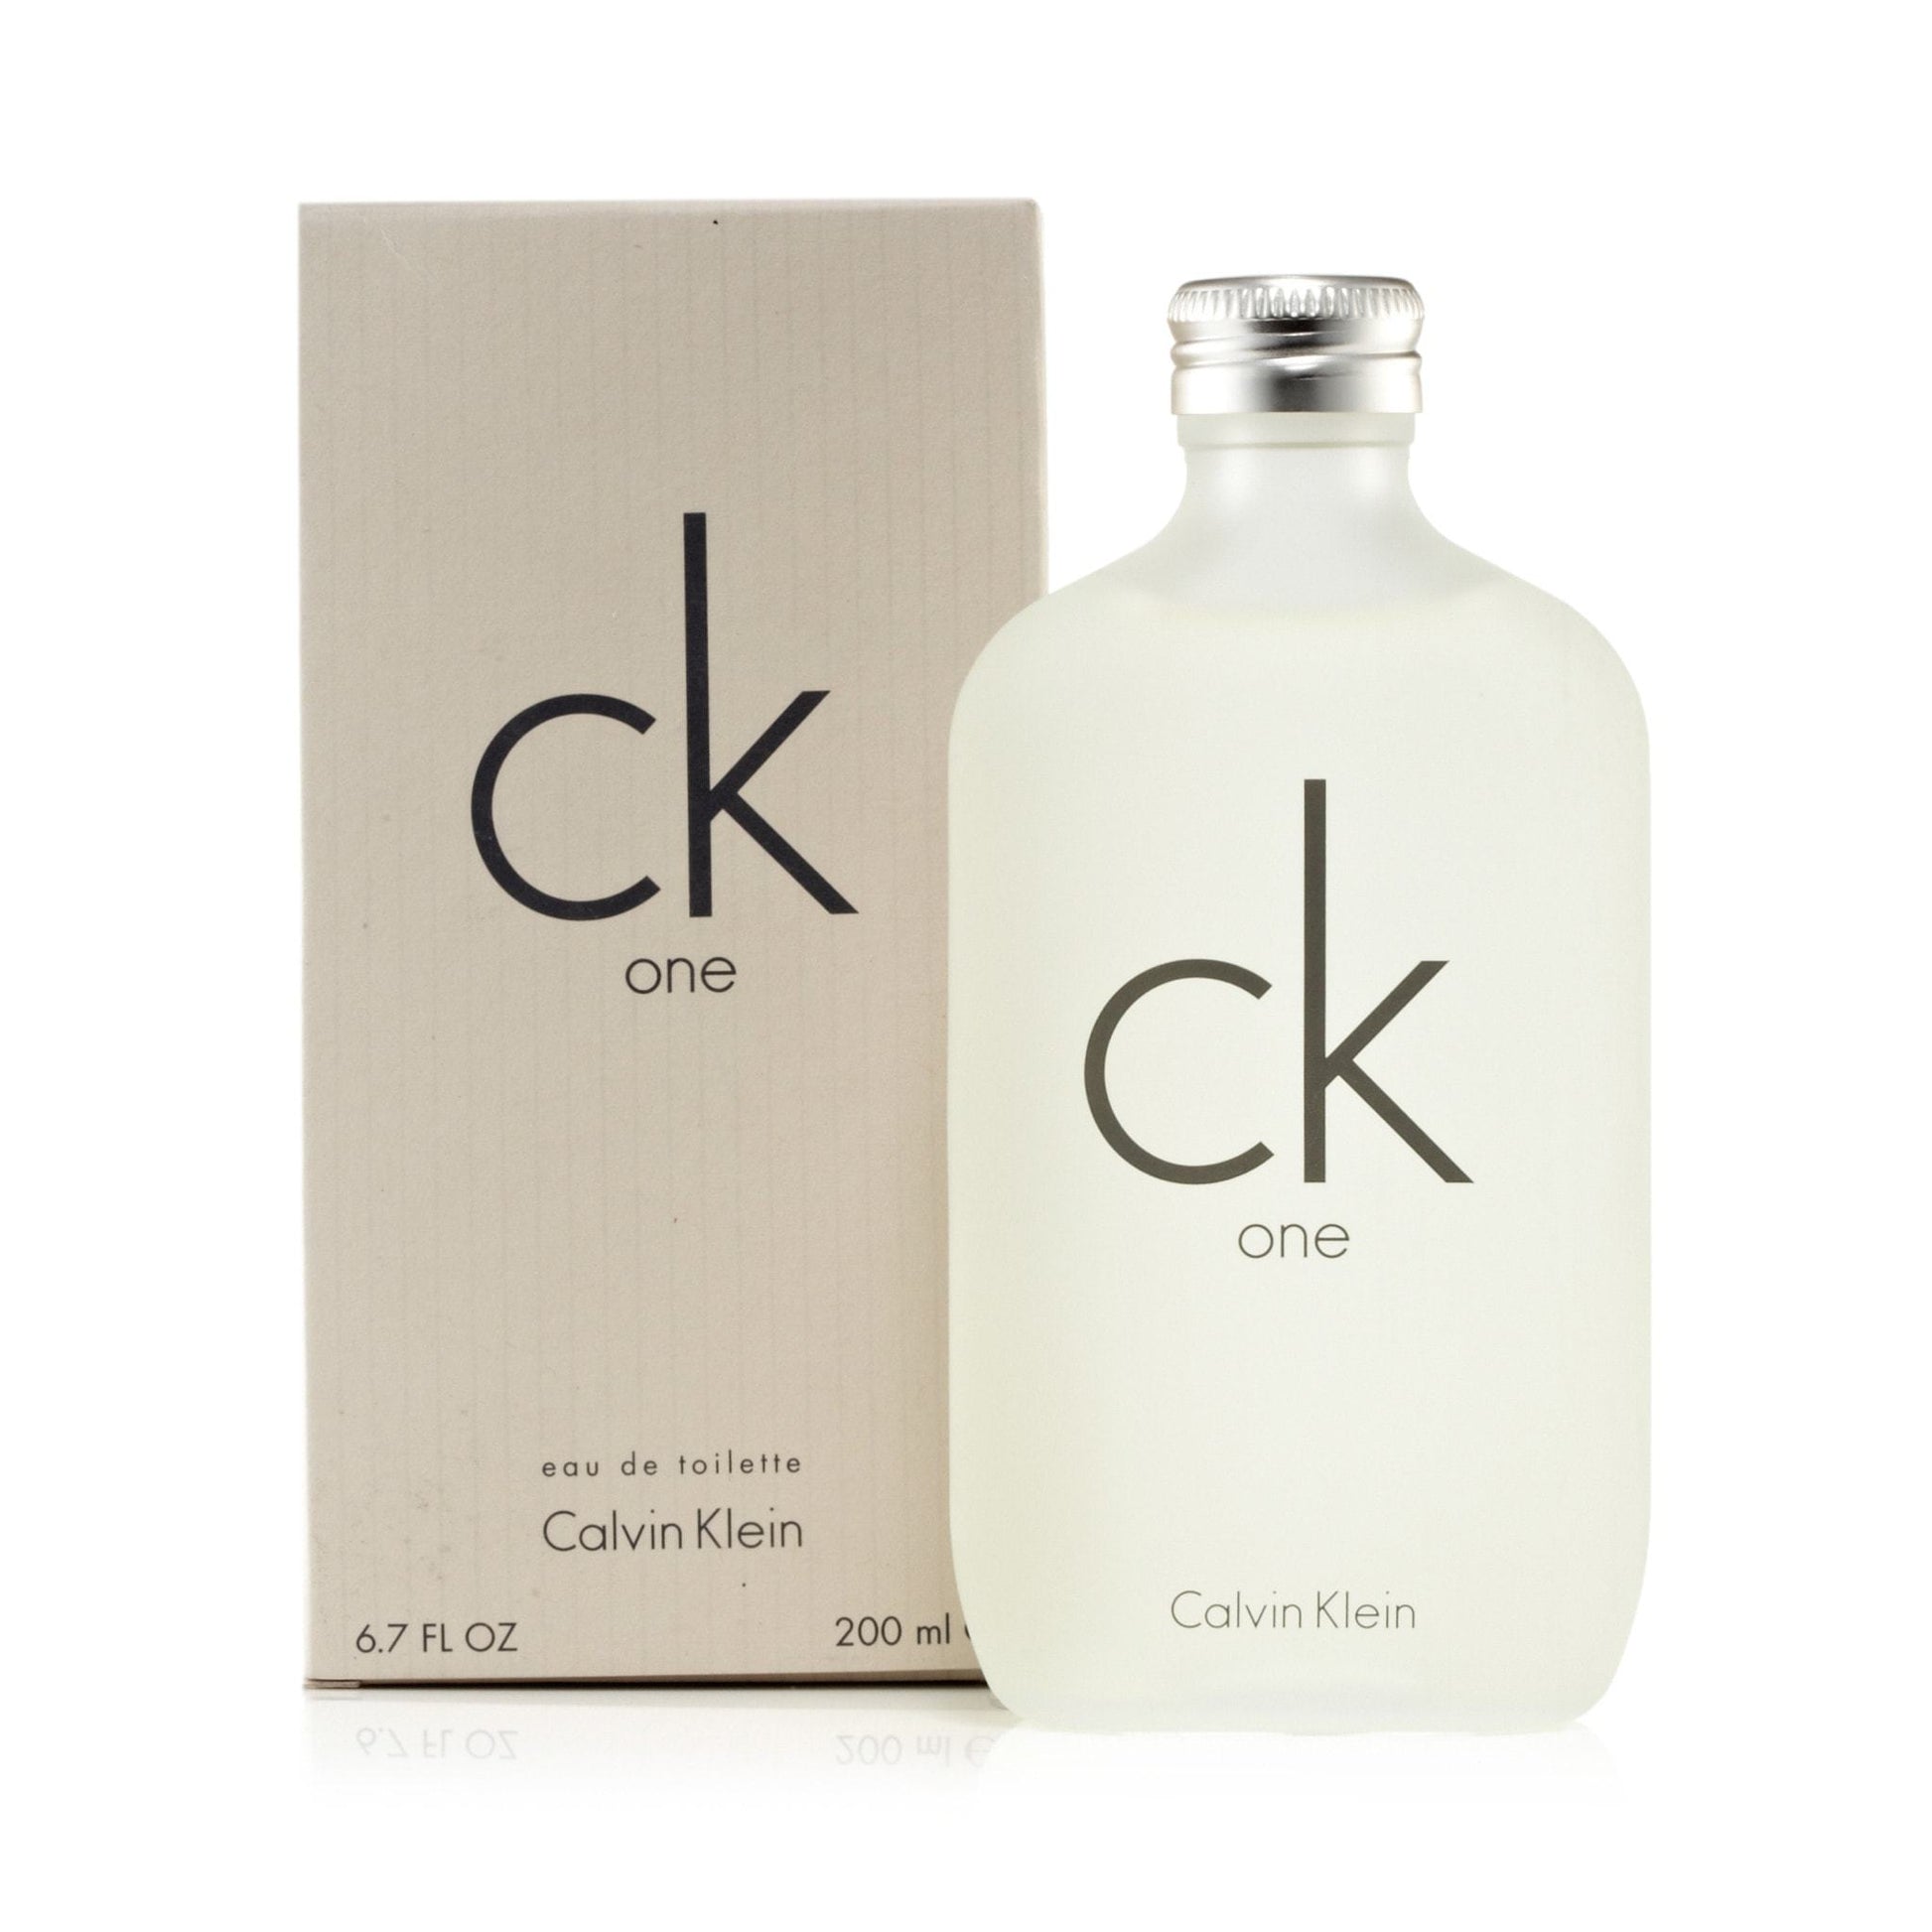 CK One Eau de Toilette Spray for Women and Men by Calvin Klein, Product image 1